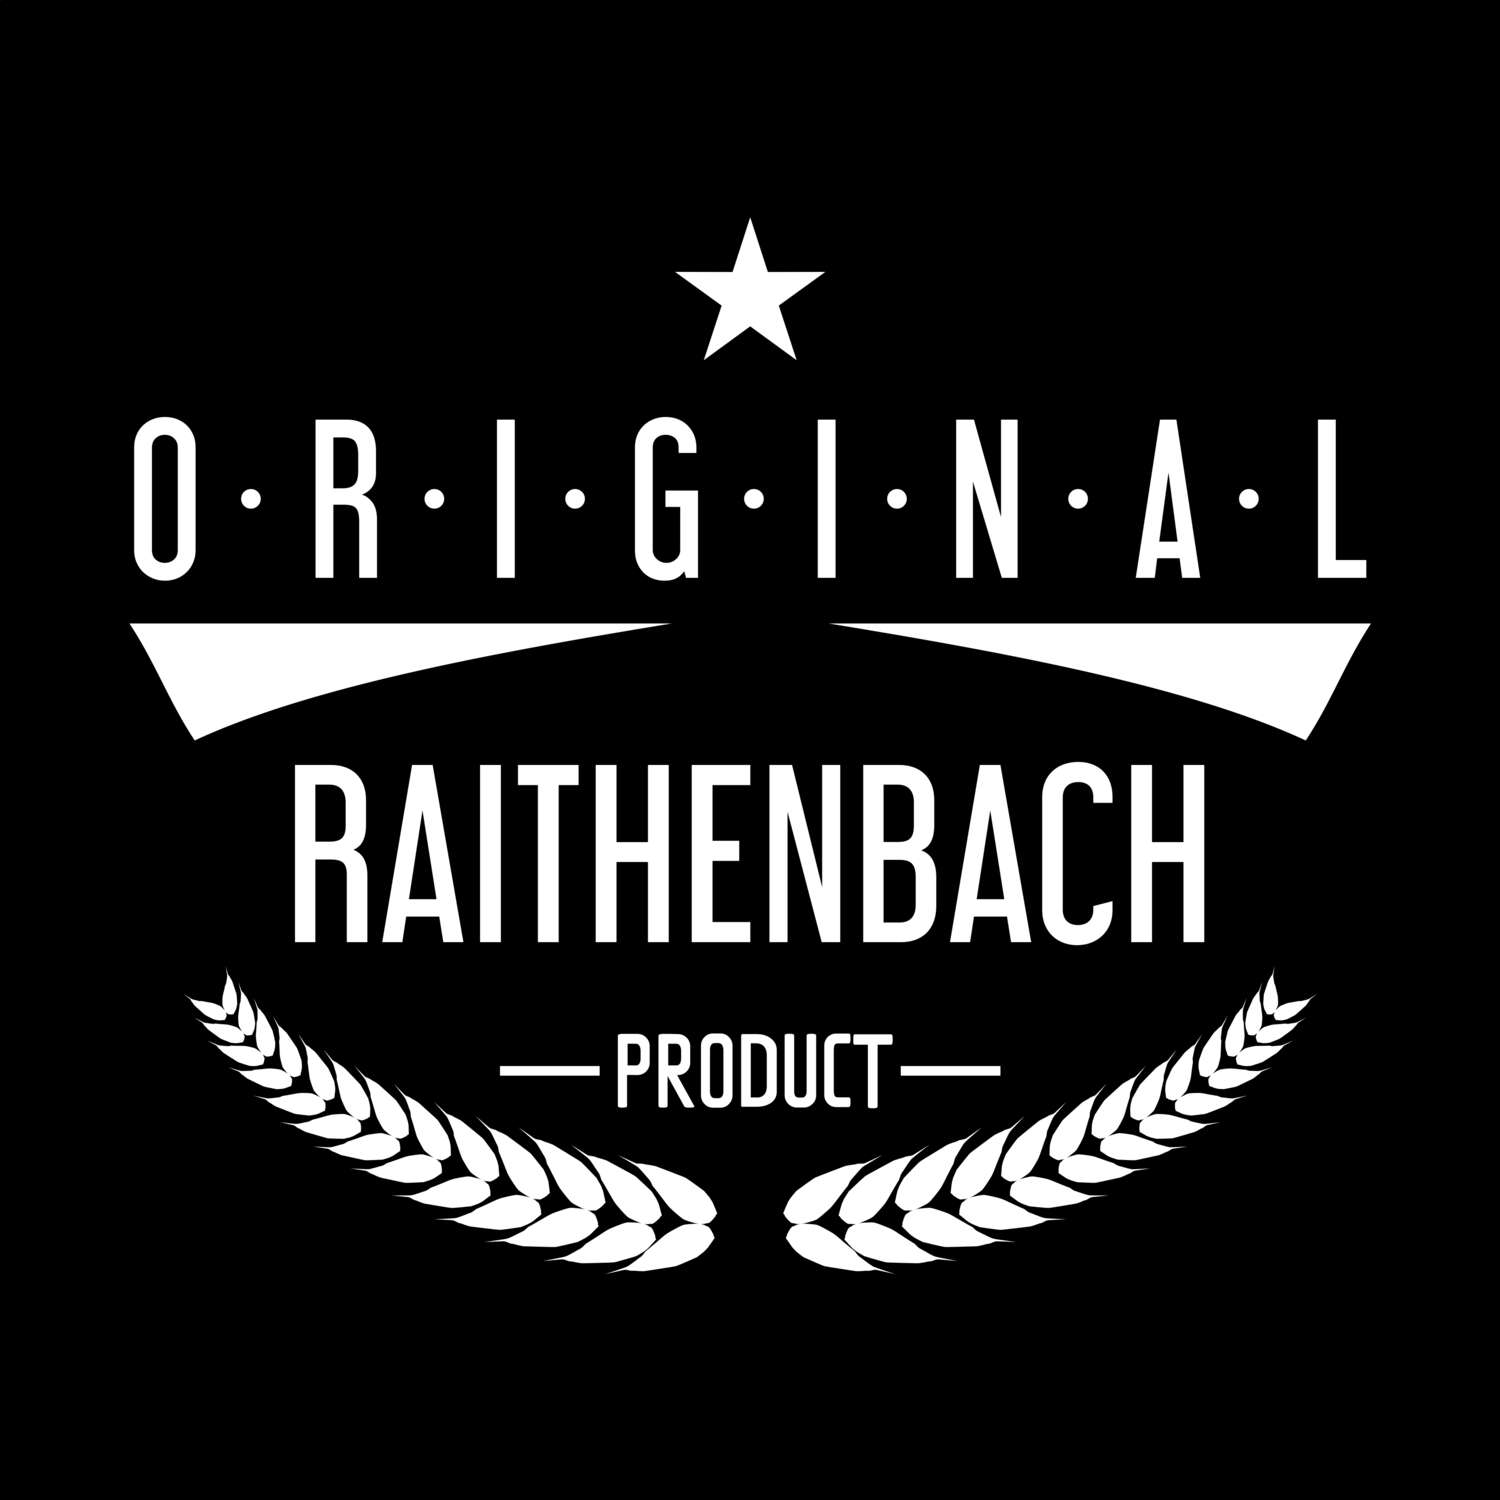 Raithenbach T-Shirt »Original Product«